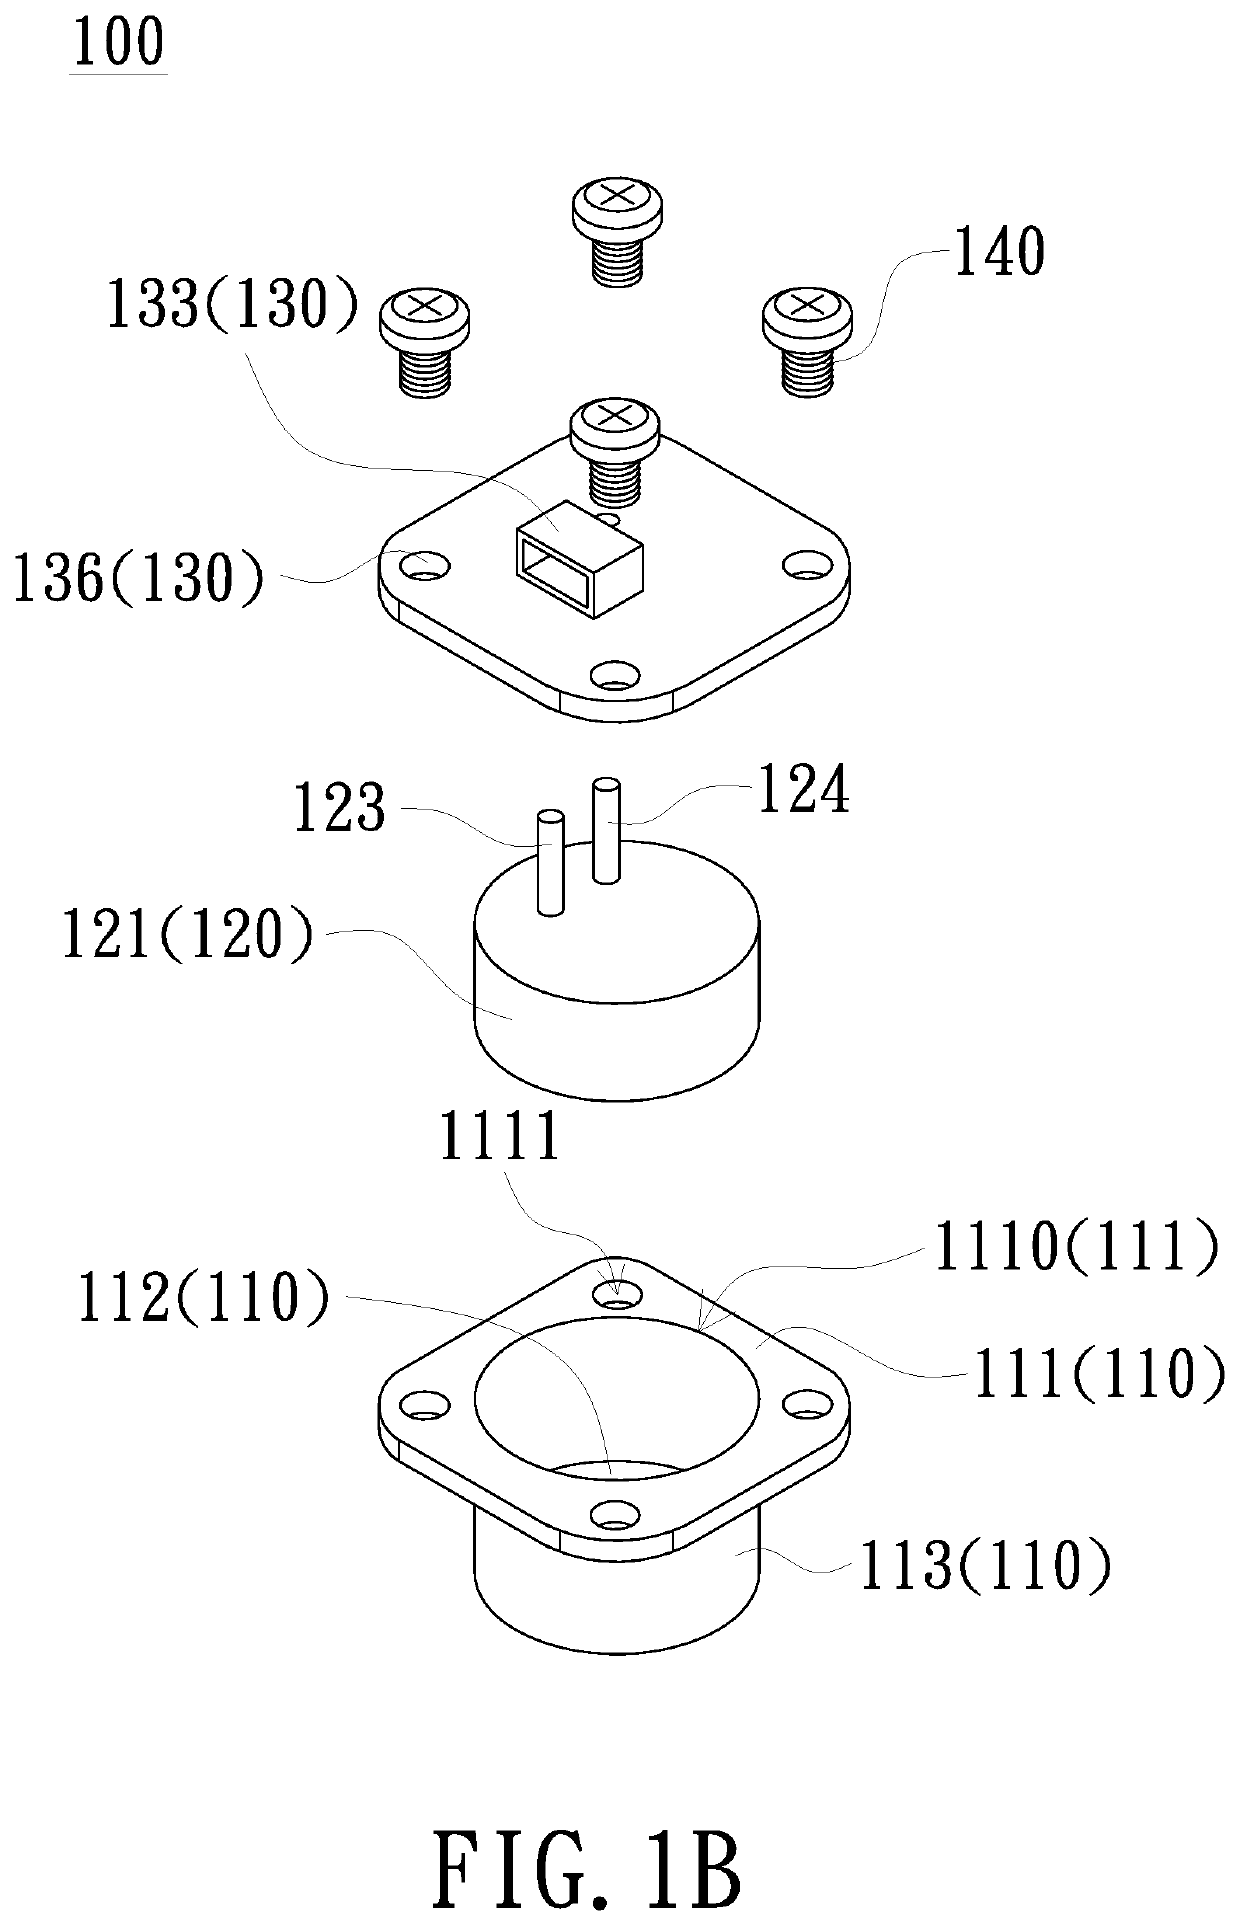 Ultrasonic sensing apparatus